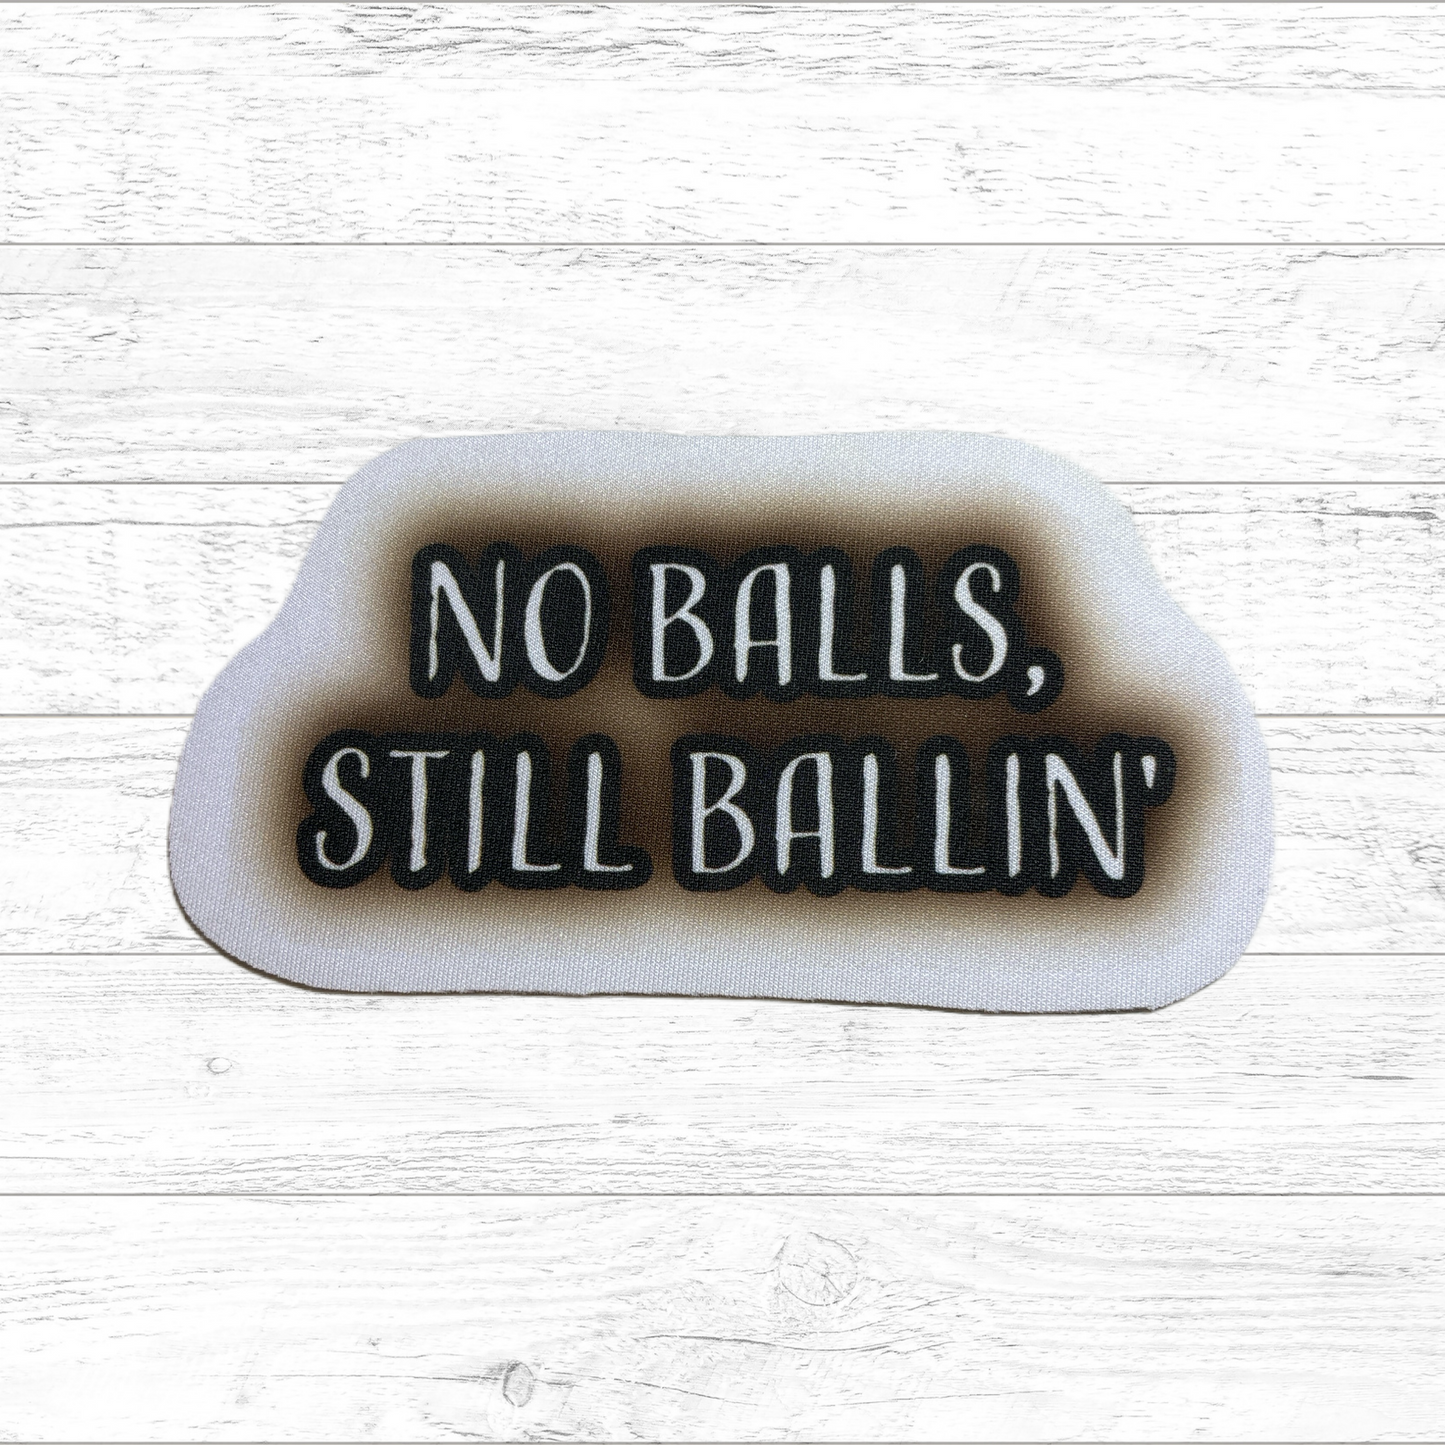 No balls, still ballin" - Sublimated Neoprene Patch